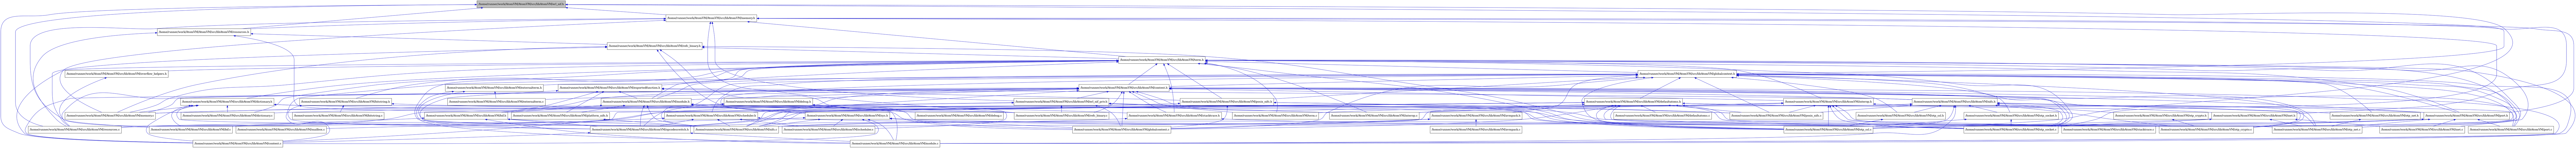 digraph {
    graph [bgcolor="#00000000"]
    node [shape=rectangle style=filled fillcolor="#FFFFFF" font=Helvetica padding=2]
    edge [color="#1414CE"]
    "10" [label="/home/runner/work/AtomVM/AtomVM/src/libAtomVM/bif.c" tooltip="/home/runner/work/AtomVM/AtomVM/src/libAtomVM/bif.c"]
    "47" [label="/home/runner/work/AtomVM/AtomVM/src/libAtomVM/dictionary.c" tooltip="/home/runner/work/AtomVM/AtomVM/src/libAtomVM/dictionary.c"]
    "9" [label="/home/runner/work/AtomVM/AtomVM/src/libAtomVM/bif.h" tooltip="/home/runner/work/AtomVM/AtomVM/src/libAtomVM/bif.h"]
    "55" [label="/home/runner/work/AtomVM/AtomVM/src/libAtomVM/dictionary.h" tooltip="/home/runner/work/AtomVM/AtomVM/src/libAtomVM/dictionary.h"]
    "54" [label="/home/runner/work/AtomVM/AtomVM/src/libAtomVM/bitstring.c" tooltip="/home/runner/work/AtomVM/AtomVM/src/libAtomVM/bitstring.c"]
    "53" [label="/home/runner/work/AtomVM/AtomVM/src/libAtomVM/bitstring.h" tooltip="/home/runner/work/AtomVM/AtomVM/src/libAtomVM/bitstring.h"]
    "32" [label="/home/runner/work/AtomVM/AtomVM/src/libAtomVM/platform_nifs.h" tooltip="/home/runner/work/AtomVM/AtomVM/src/libAtomVM/platform_nifs.h"]
    "20" [label="/home/runner/work/AtomVM/AtomVM/src/libAtomVM/posix_nifs.c" tooltip="/home/runner/work/AtomVM/AtomVM/src/libAtomVM/posix_nifs.c"]
    "48" [label="/home/runner/work/AtomVM/AtomVM/src/libAtomVM/posix_nifs.h" tooltip="/home/runner/work/AtomVM/AtomVM/src/libAtomVM/posix_nifs.h"]
    "46" [label="/home/runner/work/AtomVM/AtomVM/src/libAtomVM/defaultatoms.c" tooltip="/home/runner/work/AtomVM/AtomVM/src/libAtomVM/defaultatoms.c"]
    "45" [label="/home/runner/work/AtomVM/AtomVM/src/libAtomVM/defaultatoms.h" tooltip="/home/runner/work/AtomVM/AtomVM/src/libAtomVM/defaultatoms.h"]
    "26" [label="/home/runner/work/AtomVM/AtomVM/src/libAtomVM/inet.c" tooltip="/home/runner/work/AtomVM/AtomVM/src/libAtomVM/inet.c"]
    "25" [label="/home/runner/work/AtomVM/AtomVM/src/libAtomVM/inet.h" tooltip="/home/runner/work/AtomVM/AtomVM/src/libAtomVM/inet.h"]
    "16" [label="/home/runner/work/AtomVM/AtomVM/src/libAtomVM/scheduler.c" tooltip="/home/runner/work/AtomVM/AtomVM/src/libAtomVM/scheduler.c"]
    "43" [label="/home/runner/work/AtomVM/AtomVM/src/libAtomVM/scheduler.h" tooltip="/home/runner/work/AtomVM/AtomVM/src/libAtomVM/scheduler.h"]
    "56" [label="/home/runner/work/AtomVM/AtomVM/src/libAtomVM/exportedfunction.h" tooltip="/home/runner/work/AtomVM/AtomVM/src/libAtomVM/exportedfunction.h"]
    "2" [label="/home/runner/work/AtomVM/AtomVM/src/libAtomVM/context.c" tooltip="/home/runner/work/AtomVM/AtomVM/src/libAtomVM/context.c"]
    "8" [label="/home/runner/work/AtomVM/AtomVM/src/libAtomVM/context.h" tooltip="/home/runner/work/AtomVM/AtomVM/src/libAtomVM/context.h"]
    "41" [label="/home/runner/work/AtomVM/AtomVM/src/libAtomVM/port.c" tooltip="/home/runner/work/AtomVM/AtomVM/src/libAtomVM/port.c"]
    "42" [label="/home/runner/work/AtomVM/AtomVM/src/libAtomVM/port.h" tooltip="/home/runner/work/AtomVM/AtomVM/src/libAtomVM/port.h"]
    "58" [label="/home/runner/work/AtomVM/AtomVM/src/libAtomVM/overflow_helpers.h" tooltip="/home/runner/work/AtomVM/AtomVM/src/libAtomVM/overflow_helpers.h"]
    "34" [label="/home/runner/work/AtomVM/AtomVM/src/libAtomVM/stacktrace.c" tooltip="/home/runner/work/AtomVM/AtomVM/src/libAtomVM/stacktrace.c"]
    "33" [label="/home/runner/work/AtomVM/AtomVM/src/libAtomVM/stacktrace.h" tooltip="/home/runner/work/AtomVM/AtomVM/src/libAtomVM/stacktrace.h"]
    "21" [label="/home/runner/work/AtomVM/AtomVM/src/libAtomVM/refc_binary.c" tooltip="/home/runner/work/AtomVM/AtomVM/src/libAtomVM/refc_binary.c"]
    "51" [label="/home/runner/work/AtomVM/AtomVM/src/libAtomVM/refc_binary.h" tooltip="/home/runner/work/AtomVM/AtomVM/src/libAtomVM/refc_binary.h"]
    "44" [label="/home/runner/work/AtomVM/AtomVM/src/libAtomVM/mailbox.c" tooltip="/home/runner/work/AtomVM/AtomVM/src/libAtomVM/mailbox.c"]
    "11" [label="/home/runner/work/AtomVM/AtomVM/src/libAtomVM/module.c" tooltip="/home/runner/work/AtomVM/AtomVM/src/libAtomVM/module.c"]
    "31" [label="/home/runner/work/AtomVM/AtomVM/src/libAtomVM/module.h" tooltip="/home/runner/work/AtomVM/AtomVM/src/libAtomVM/module.h"]
    "5" [label="/home/runner/work/AtomVM/AtomVM/src/libAtomVM/avmpack.c" tooltip="/home/runner/work/AtomVM/AtomVM/src/libAtomVM/avmpack.c"]
    "4" [label="/home/runner/work/AtomVM/AtomVM/src/libAtomVM/avmpack.h" tooltip="/home/runner/work/AtomVM/AtomVM/src/libAtomVM/avmpack.h"]
    "30" [label="/home/runner/work/AtomVM/AtomVM/src/libAtomVM/term.c" tooltip="/home/runner/work/AtomVM/AtomVM/src/libAtomVM/term.c"]
    "52" [label="/home/runner/work/AtomVM/AtomVM/src/libAtomVM/term.h" tooltip="/home/runner/work/AtomVM/AtomVM/src/libAtomVM/term.h"]
    "1" [label="/home/runner/work/AtomVM/AtomVM/src/libAtomVM/erl_nif.h" tooltip="/home/runner/work/AtomVM/AtomVM/src/libAtomVM/erl_nif.h" fillcolor="#BFBFBF"]
    "28" [label="/home/runner/work/AtomVM/AtomVM/src/libAtomVM/interop.c" tooltip="/home/runner/work/AtomVM/AtomVM/src/libAtomVM/interop.c"]
    "19" [label="/home/runner/work/AtomVM/AtomVM/src/libAtomVM/otp_ssl.c" tooltip="/home/runner/work/AtomVM/AtomVM/src/libAtomVM/otp_ssl.c"]
    "24" [label="/home/runner/work/AtomVM/AtomVM/src/libAtomVM/interop.h" tooltip="/home/runner/work/AtomVM/AtomVM/src/libAtomVM/interop.h"]
    "40" [label="/home/runner/work/AtomVM/AtomVM/src/libAtomVM/otp_ssl.h" tooltip="/home/runner/work/AtomVM/AtomVM/src/libAtomVM/otp_ssl.h"]
    "22" [label="/home/runner/work/AtomVM/AtomVM/src/libAtomVM/resources.c" tooltip="/home/runner/work/AtomVM/AtomVM/src/libAtomVM/resources.c"]
    "50" [label="/home/runner/work/AtomVM/AtomVM/src/libAtomVM/resources.h" tooltip="/home/runner/work/AtomVM/AtomVM/src/libAtomVM/resources.h"]
    "29" [label="/home/runner/work/AtomVM/AtomVM/src/libAtomVM/otp_crypto.c" tooltip="/home/runner/work/AtomVM/AtomVM/src/libAtomVM/otp_crypto.c"]
    "37" [label="/home/runner/work/AtomVM/AtomVM/src/libAtomVM/otp_crypto.h" tooltip="/home/runner/work/AtomVM/AtomVM/src/libAtomVM/otp_crypto.h"]
    "27" [label="/home/runner/work/AtomVM/AtomVM/src/libAtomVM/otp_net.c" tooltip="/home/runner/work/AtomVM/AtomVM/src/libAtomVM/otp_net.c"]
    "38" [label="/home/runner/work/AtomVM/AtomVM/src/libAtomVM/otp_net.h" tooltip="/home/runner/work/AtomVM/AtomVM/src/libAtomVM/otp_net.h"]
    "17" [label="/home/runner/work/AtomVM/AtomVM/src/libAtomVM/erl_nif_priv.h" tooltip="/home/runner/work/AtomVM/AtomVM/src/libAtomVM/erl_nif_priv.h"]
    "35" [label="/home/runner/work/AtomVM/AtomVM/src/libAtomVM/sys.h" tooltip="/home/runner/work/AtomVM/AtomVM/src/libAtomVM/sys.h"]
    "7" [label="/home/runner/work/AtomVM/AtomVM/src/libAtomVM/nifs.c" tooltip="/home/runner/work/AtomVM/AtomVM/src/libAtomVM/nifs.c"]
    "36" [label="/home/runner/work/AtomVM/AtomVM/src/libAtomVM/nifs.h" tooltip="/home/runner/work/AtomVM/AtomVM/src/libAtomVM/nifs.h"]
    "12" [label="/home/runner/work/AtomVM/AtomVM/src/libAtomVM/opcodesswitch.h" tooltip="/home/runner/work/AtomVM/AtomVM/src/libAtomVM/opcodesswitch.h"]
    "14" [label="/home/runner/work/AtomVM/AtomVM/src/libAtomVM/debug.c" tooltip="/home/runner/work/AtomVM/AtomVM/src/libAtomVM/debug.c"]
    "13" [label="/home/runner/work/AtomVM/AtomVM/src/libAtomVM/debug.h" tooltip="/home/runner/work/AtomVM/AtomVM/src/libAtomVM/debug.h"]
    "6" [label="/home/runner/work/AtomVM/AtomVM/src/libAtomVM/globalcontext.c" tooltip="/home/runner/work/AtomVM/AtomVM/src/libAtomVM/globalcontext.c"]
    "3" [label="/home/runner/work/AtomVM/AtomVM/src/libAtomVM/globalcontext.h" tooltip="/home/runner/work/AtomVM/AtomVM/src/libAtomVM/globalcontext.h"]
    "15" [label="/home/runner/work/AtomVM/AtomVM/src/libAtomVM/memory.c" tooltip="/home/runner/work/AtomVM/AtomVM/src/libAtomVM/memory.c"]
    "18" [label="/home/runner/work/AtomVM/AtomVM/src/libAtomVM/otp_socket.c" tooltip="/home/runner/work/AtomVM/AtomVM/src/libAtomVM/otp_socket.c"]
    "49" [label="/home/runner/work/AtomVM/AtomVM/src/libAtomVM/memory.h" tooltip="/home/runner/work/AtomVM/AtomVM/src/libAtomVM/memory.h"]
    "39" [label="/home/runner/work/AtomVM/AtomVM/src/libAtomVM/otp_socket.h" tooltip="/home/runner/work/AtomVM/AtomVM/src/libAtomVM/otp_socket.h"]
    "23" [label="/home/runner/work/AtomVM/AtomVM/src/libAtomVM/externalterm.c" tooltip="/home/runner/work/AtomVM/AtomVM/src/libAtomVM/externalterm.c"]
    "57" [label="/home/runner/work/AtomVM/AtomVM/src/libAtomVM/externalterm.h" tooltip="/home/runner/work/AtomVM/AtomVM/src/libAtomVM/externalterm.h"]
    "9" -> "10" [dir=back tooltip="include"]
    "9" -> "11" [dir=back tooltip="include"]
    "9" -> "7" [dir=back tooltip="include"]
    "9" -> "12" [dir=back tooltip="include"]
    "55" -> "10" [dir=back tooltip="include"]
    "55" -> "2" [dir=back tooltip="include"]
    "55" -> "47" [dir=back tooltip="include"]
    "55" -> "15" [dir=back tooltip="include"]
    "55" -> "7" [dir=back tooltip="include"]
    "55" -> "18" [dir=back tooltip="include"]
    "55" -> "21" [dir=back tooltip="include"]
    "53" -> "54" [dir=back tooltip="include"]
    "53" -> "28" [dir=back tooltip="include"]
    "53" -> "12" [dir=back tooltip="include"]
    "32" -> "7" [dir=back tooltip="include"]
    "48" -> "6" [dir=back tooltip="include"]
    "48" -> "7" [dir=back tooltip="include"]
    "48" -> "18" [dir=back tooltip="include"]
    "48" -> "20" [dir=back tooltip="include"]
    "45" -> "10" [dir=back tooltip="include"]
    "45" -> "46" [dir=back tooltip="include"]
    "45" -> "47" [dir=back tooltip="include"]
    "45" -> "6" [dir=back tooltip="include"]
    "45" -> "28" [dir=back tooltip="include"]
    "45" -> "7" [dir=back tooltip="include"]
    "45" -> "12" [dir=back tooltip="include"]
    "45" -> "29" [dir=back tooltip="include"]
    "45" -> "27" [dir=back tooltip="include"]
    "45" -> "18" [dir=back tooltip="include"]
    "45" -> "19" [dir=back tooltip="include"]
    "45" -> "41" [dir=back tooltip="include"]
    "45" -> "42" [dir=back tooltip="include"]
    "45" -> "20" [dir=back tooltip="include"]
    "45" -> "22" [dir=back tooltip="include"]
    "45" -> "34" [dir=back tooltip="include"]
    "25" -> "26" [dir=back tooltip="include"]
    "25" -> "27" [dir=back tooltip="include"]
    "25" -> "18" [dir=back tooltip="include"]
    "25" -> "19" [dir=back tooltip="include"]
    "43" -> "44" [dir=back tooltip="include"]
    "43" -> "7" [dir=back tooltip="include"]
    "43" -> "12" [dir=back tooltip="include"]
    "43" -> "18" [dir=back tooltip="include"]
    "43" -> "16" [dir=back tooltip="include"]
    "56" -> "9" [dir=back tooltip="include"]
    "56" -> "31" [dir=back tooltip="include"]
    "56" -> "36" [dir=back tooltip="include"]
    "56" -> "12" [dir=back tooltip="include"]
    "56" -> "32" [dir=back tooltip="include"]
    "56" -> "48" [dir=back tooltip="include"]
    "8" -> "9" [dir=back tooltip="include"]
    "8" -> "2" [dir=back tooltip="include"]
    "8" -> "13" [dir=back tooltip="include"]
    "8" -> "17" [dir=back tooltip="include"]
    "8" -> "23" [dir=back tooltip="include"]
    "8" -> "6" [dir=back tooltip="include"]
    "8" -> "24" [dir=back tooltip="include"]
    "8" -> "15" [dir=back tooltip="include"]
    "8" -> "11" [dir=back tooltip="include"]
    "8" -> "31" [dir=back tooltip="include"]
    "8" -> "7" [dir=back tooltip="include"]
    "8" -> "36" [dir=back tooltip="include"]
    "8" -> "29" [dir=back tooltip="include"]
    "8" -> "27" [dir=back tooltip="include"]
    "8" -> "18" [dir=back tooltip="include"]
    "8" -> "19" [dir=back tooltip="include"]
    "8" -> "41" [dir=back tooltip="include"]
    "8" -> "42" [dir=back tooltip="include"]
    "8" -> "21" [dir=back tooltip="include"]
    "8" -> "22" [dir=back tooltip="include"]
    "8" -> "43" [dir=back tooltip="include"]
    "8" -> "33" [dir=back tooltip="include"]
    "8" -> "30" [dir=back tooltip="include"]
    "42" -> "26" [dir=back tooltip="include"]
    "42" -> "7" [dir=back tooltip="include"]
    "42" -> "27" [dir=back tooltip="include"]
    "42" -> "18" [dir=back tooltip="include"]
    "42" -> "19" [dir=back tooltip="include"]
    "42" -> "41" [dir=back tooltip="include"]
    "58" -> "10" [dir=back tooltip="include"]
    "33" -> "12" [dir=back tooltip="include"]
    "33" -> "34" [dir=back tooltip="include"]
    "51" -> "6" [dir=back tooltip="include"]
    "51" -> "15" [dir=back tooltip="include"]
    "51" -> "19" [dir=back tooltip="include"]
    "51" -> "21" [dir=back tooltip="include"]
    "51" -> "22" [dir=back tooltip="include"]
    "51" -> "52" [dir=back tooltip="include"]
    "31" -> "9" [dir=back tooltip="include"]
    "31" -> "11" [dir=back tooltip="include"]
    "31" -> "7" [dir=back tooltip="include"]
    "31" -> "12" [dir=back tooltip="include"]
    "31" -> "32" [dir=back tooltip="include"]
    "31" -> "33" [dir=back tooltip="include"]
    "31" -> "35" [dir=back tooltip="include"]
    "4" -> "5" [dir=back tooltip="include"]
    "4" -> "6" [dir=back tooltip="include"]
    "4" -> "7" [dir=back tooltip="include"]
    "52" -> "53" [dir=back tooltip="include"]
    "52" -> "2" [dir=back tooltip="include"]
    "52" -> "8" [dir=back tooltip="include"]
    "52" -> "47" [dir=back tooltip="include"]
    "52" -> "55" [dir=back tooltip="include"]
    "52" -> "56" [dir=back tooltip="include"]
    "52" -> "57" [dir=back tooltip="include"]
    "52" -> "3" [dir=back tooltip="include"]
    "52" -> "26" [dir=back tooltip="include"]
    "52" -> "28" [dir=back tooltip="include"]
    "52" -> "24" [dir=back tooltip="include"]
    "52" -> "15" [dir=back tooltip="include"]
    "52" -> "11" [dir=back tooltip="include"]
    "52" -> "31" [dir=back tooltip="include"]
    "52" -> "7" [dir=back tooltip="include"]
    "52" -> "29" [dir=back tooltip="include"]
    "52" -> "27" [dir=back tooltip="include"]
    "52" -> "18" [dir=back tooltip="include"]
    "52" -> "19" [dir=back tooltip="include"]
    "52" -> "58" [dir=back tooltip="include"]
    "52" -> "42" [dir=back tooltip="include"]
    "52" -> "48" [dir=back tooltip="include"]
    "52" -> "33" [dir=back tooltip="include"]
    "52" -> "30" [dir=back tooltip="include"]
    "1" -> "2" [dir=back tooltip="include"]
    "1" -> "3" [dir=back tooltip="include"]
    "1" -> "49" [dir=back tooltip="include"]
    "1" -> "19" [dir=back tooltip="include"]
    "1" -> "22" [dir=back tooltip="include"]
    "1" -> "50" [dir=back tooltip="include"]
    "24" -> "25" [dir=back tooltip="include"]
    "24" -> "28" [dir=back tooltip="include"]
    "24" -> "7" [dir=back tooltip="include"]
    "24" -> "29" [dir=back tooltip="include"]
    "24" -> "27" [dir=back tooltip="include"]
    "24" -> "18" [dir=back tooltip="include"]
    "24" -> "19" [dir=back tooltip="include"]
    "24" -> "20" [dir=back tooltip="include"]
    "24" -> "30" [dir=back tooltip="include"]
    "40" -> "19" [dir=back tooltip="include"]
    "50" -> "6" [dir=back tooltip="include"]
    "50" -> "51" [dir=back tooltip="include"]
    "50" -> "22" [dir=back tooltip="include"]
    "37" -> "29" [dir=back tooltip="include"]
    "38" -> "27" [dir=back tooltip="include"]
    "17" -> "2" [dir=back tooltip="include"]
    "17" -> "6" [dir=back tooltip="include"]
    "17" -> "15" [dir=back tooltip="include"]
    "17" -> "18" [dir=back tooltip="include"]
    "17" -> "19" [dir=back tooltip="include"]
    "17" -> "20" [dir=back tooltip="include"]
    "17" -> "21" [dir=back tooltip="include"]
    "17" -> "22" [dir=back tooltip="include"]
    "35" -> "2" [dir=back tooltip="include"]
    "35" -> "6" [dir=back tooltip="include"]
    "35" -> "11" [dir=back tooltip="include"]
    "35" -> "7" [dir=back tooltip="include"]
    "35" -> "18" [dir=back tooltip="include"]
    "35" -> "22" [dir=back tooltip="include"]
    "35" -> "16" [dir=back tooltip="include"]
    "36" -> "11" [dir=back tooltip="include"]
    "36" -> "7" [dir=back tooltip="include"]
    "36" -> "12" [dir=back tooltip="include"]
    "36" -> "29" [dir=back tooltip="include"]
    "36" -> "37" [dir=back tooltip="include"]
    "36" -> "27" [dir=back tooltip="include"]
    "36" -> "38" [dir=back tooltip="include"]
    "36" -> "18" [dir=back tooltip="include"]
    "36" -> "39" [dir=back tooltip="include"]
    "36" -> "19" [dir=back tooltip="include"]
    "36" -> "40" [dir=back tooltip="include"]
    "36" -> "20" [dir=back tooltip="include"]
    "12" -> "2" [dir=back tooltip="include"]
    "12" -> "11" [dir=back tooltip="include"]
    "13" -> "14" [dir=back tooltip="include"]
    "13" -> "15" [dir=back tooltip="include"]
    "13" -> "12" [dir=back tooltip="include"]
    "13" -> "16" [dir=back tooltip="include"]
    "3" -> "4" [dir=back tooltip="include"]
    "3" -> "2" [dir=back tooltip="include"]
    "3" -> "8" [dir=back tooltip="include"]
    "3" -> "45" [dir=back tooltip="include"]
    "3" -> "6" [dir=back tooltip="include"]
    "3" -> "11" [dir=back tooltip="include"]
    "3" -> "31" [dir=back tooltip="include"]
    "3" -> "7" [dir=back tooltip="include"]
    "3" -> "29" [dir=back tooltip="include"]
    "3" -> "27" [dir=back tooltip="include"]
    "3" -> "38" [dir=back tooltip="include"]
    "3" -> "18" [dir=back tooltip="include"]
    "3" -> "39" [dir=back tooltip="include"]
    "3" -> "19" [dir=back tooltip="include"]
    "3" -> "40" [dir=back tooltip="include"]
    "3" -> "41" [dir=back tooltip="include"]
    "3" -> "42" [dir=back tooltip="include"]
    "3" -> "20" [dir=back tooltip="include"]
    "3" -> "48" [dir=back tooltip="include"]
    "3" -> "43" [dir=back tooltip="include"]
    "3" -> "34" [dir=back tooltip="include"]
    "3" -> "35" [dir=back tooltip="include"]
    "49" -> "17" [dir=back tooltip="include"]
    "49" -> "25" [dir=back tooltip="include"]
    "49" -> "44" [dir=back tooltip="include"]
    "49" -> "15" [dir=back tooltip="include"]
    "49" -> "18" [dir=back tooltip="include"]
    "49" -> "42" [dir=back tooltip="include"]
    "49" -> "21" [dir=back tooltip="include"]
    "49" -> "50" [dir=back tooltip="include"]
    "49" -> "52" [dir=back tooltip="include"]
    "39" -> "18" [dir=back tooltip="include"]
    "39" -> "19" [dir=back tooltip="include"]
    "57" -> "23" [dir=back tooltip="include"]
    "57" -> "11" [dir=back tooltip="include"]
    "57" -> "7" [dir=back tooltip="include"]
}